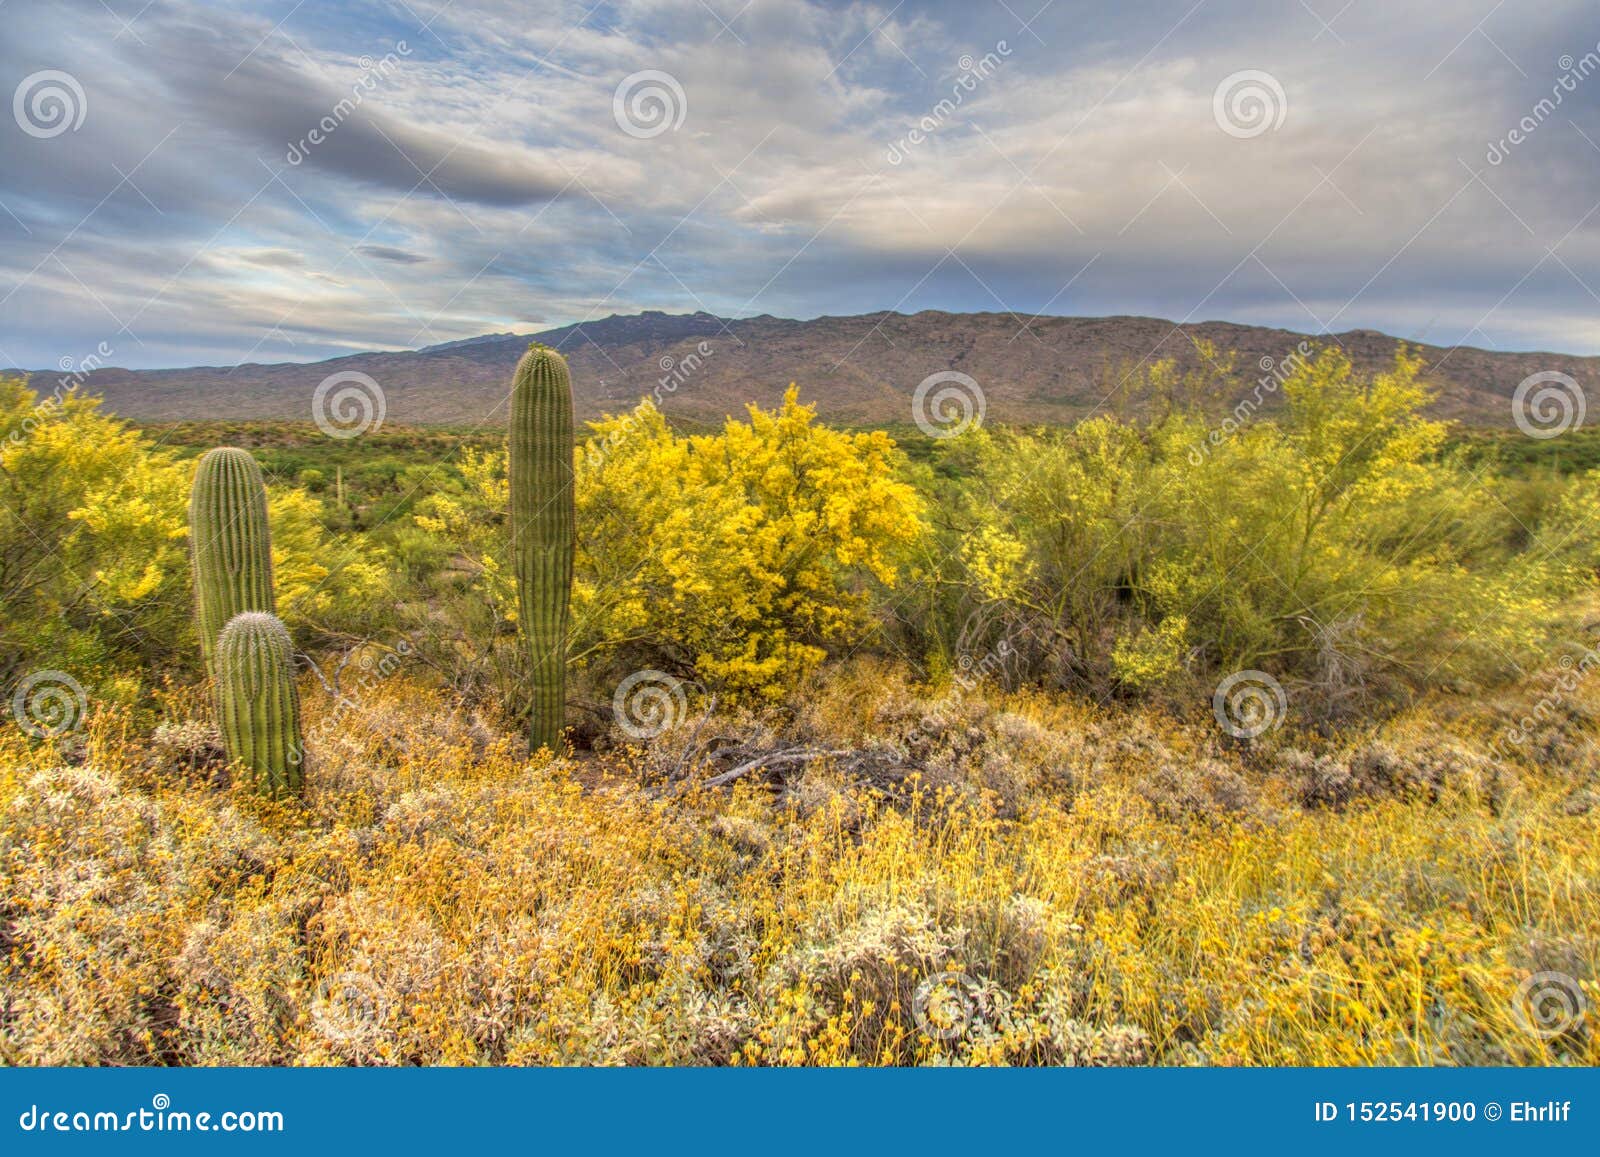 Wildflower Arizona Desert Landscape with Saguaro Cactus Stock Photo ...